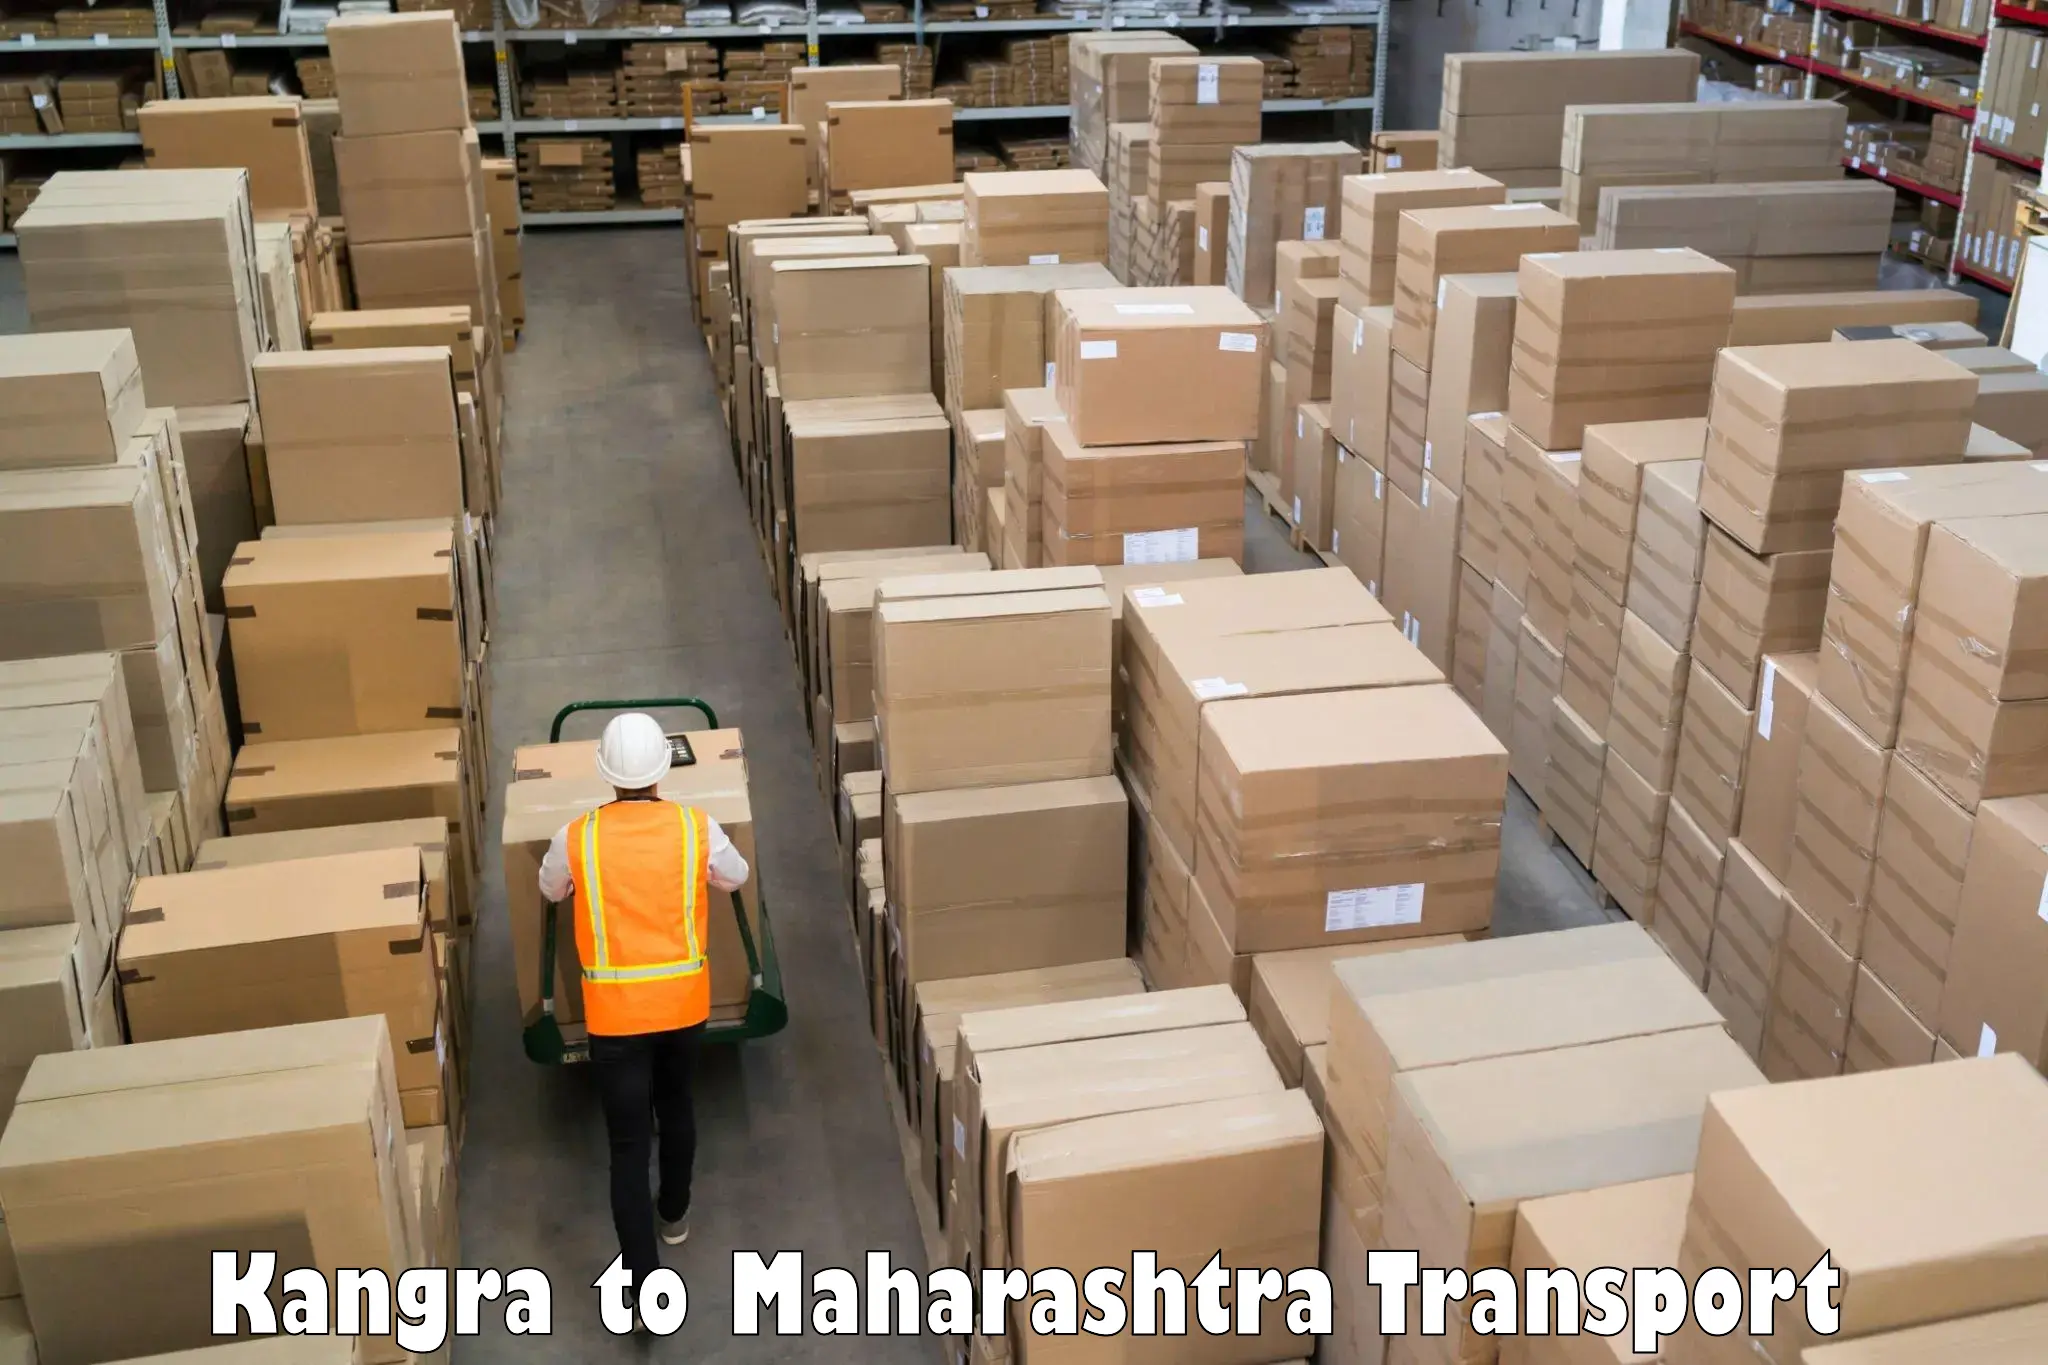 Shipping partner Kangra to Khandala Pune